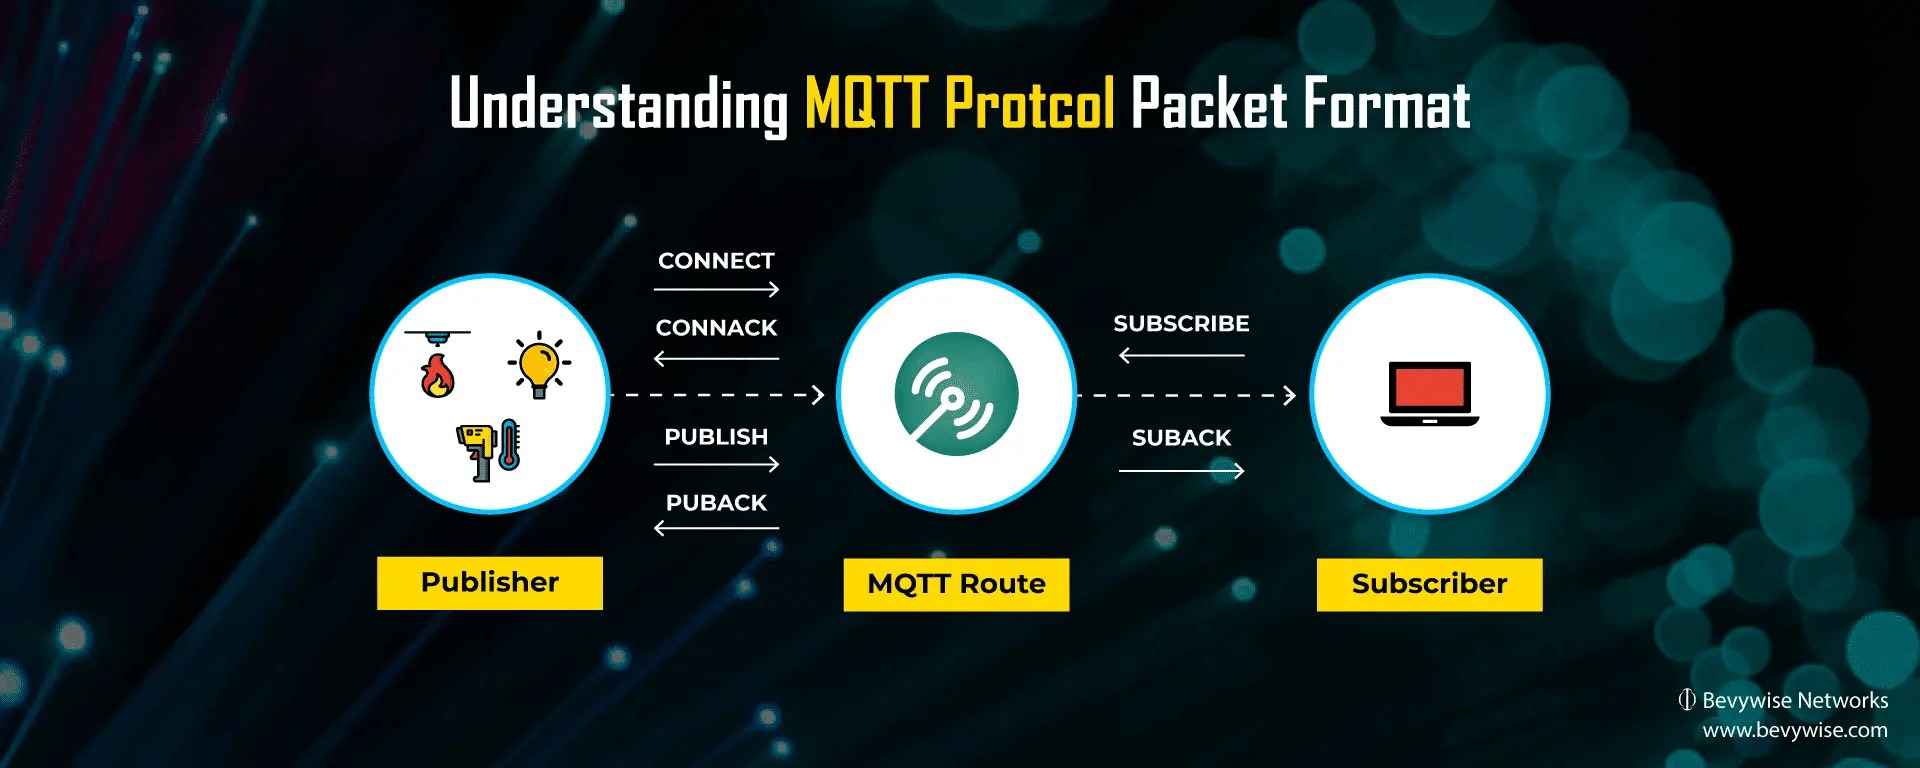 MQTT protocol packet format